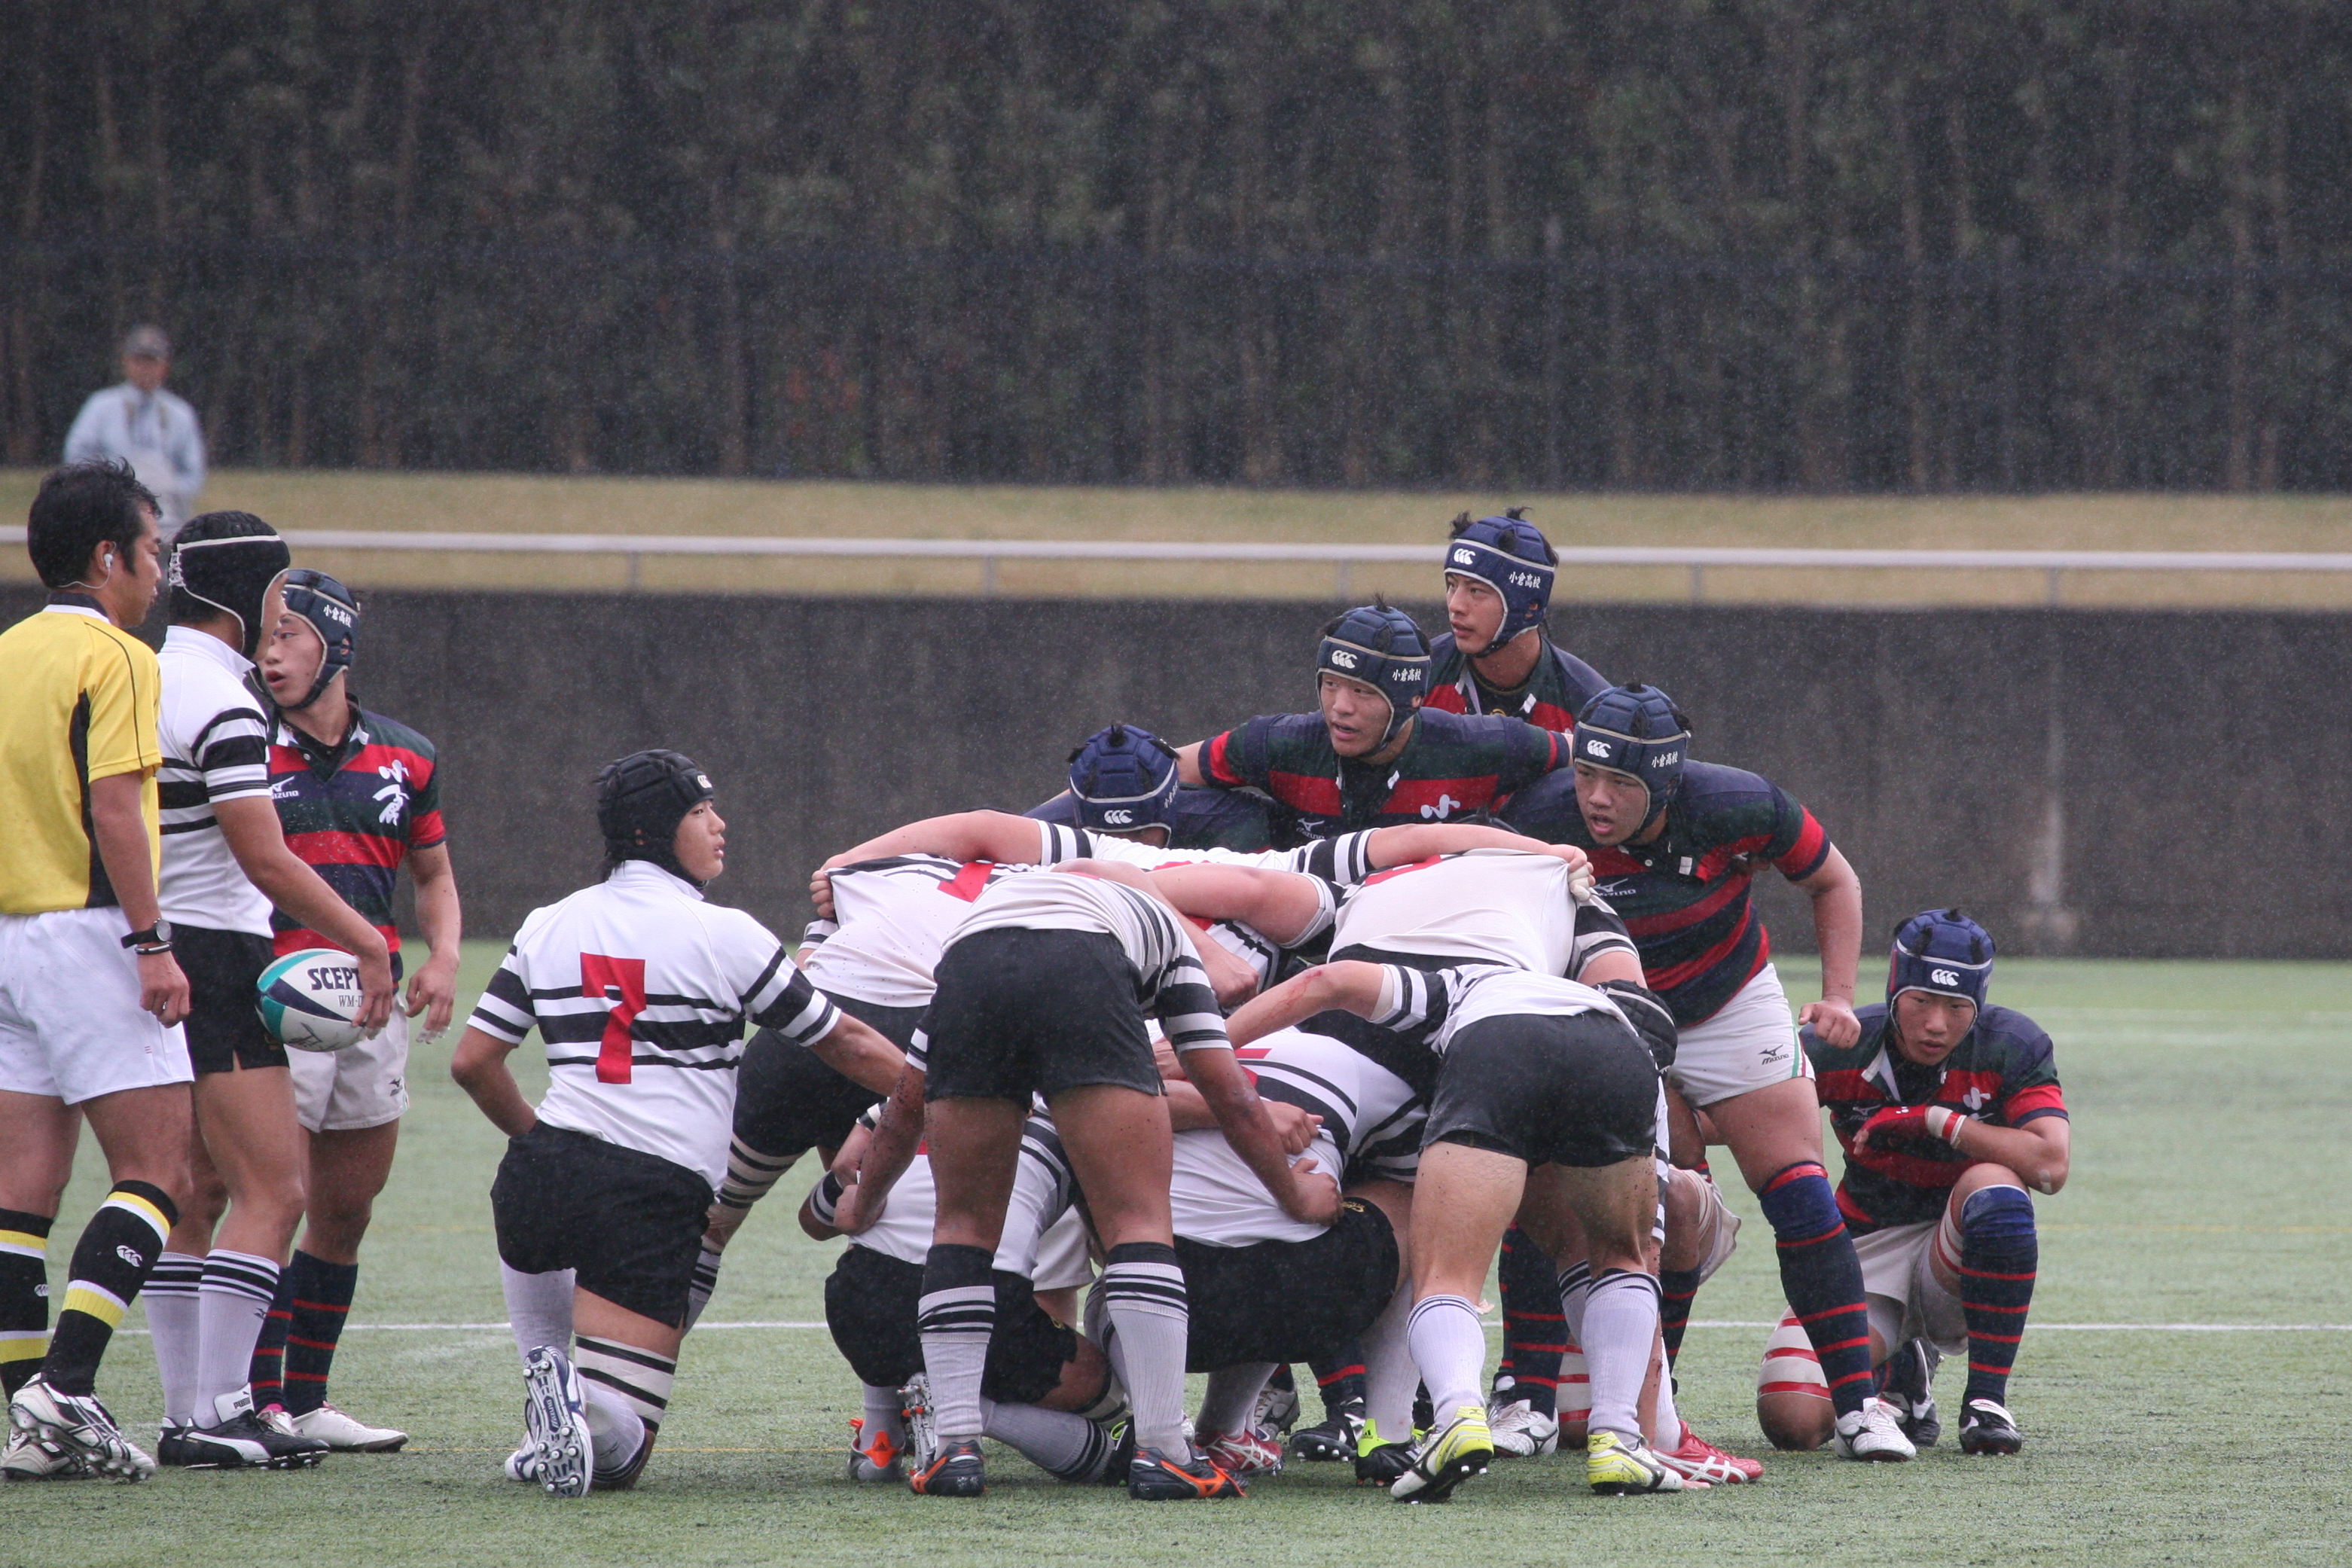 http://kokura-rugby.sakura.ne.jp/2011.11.6-2-5.JPG